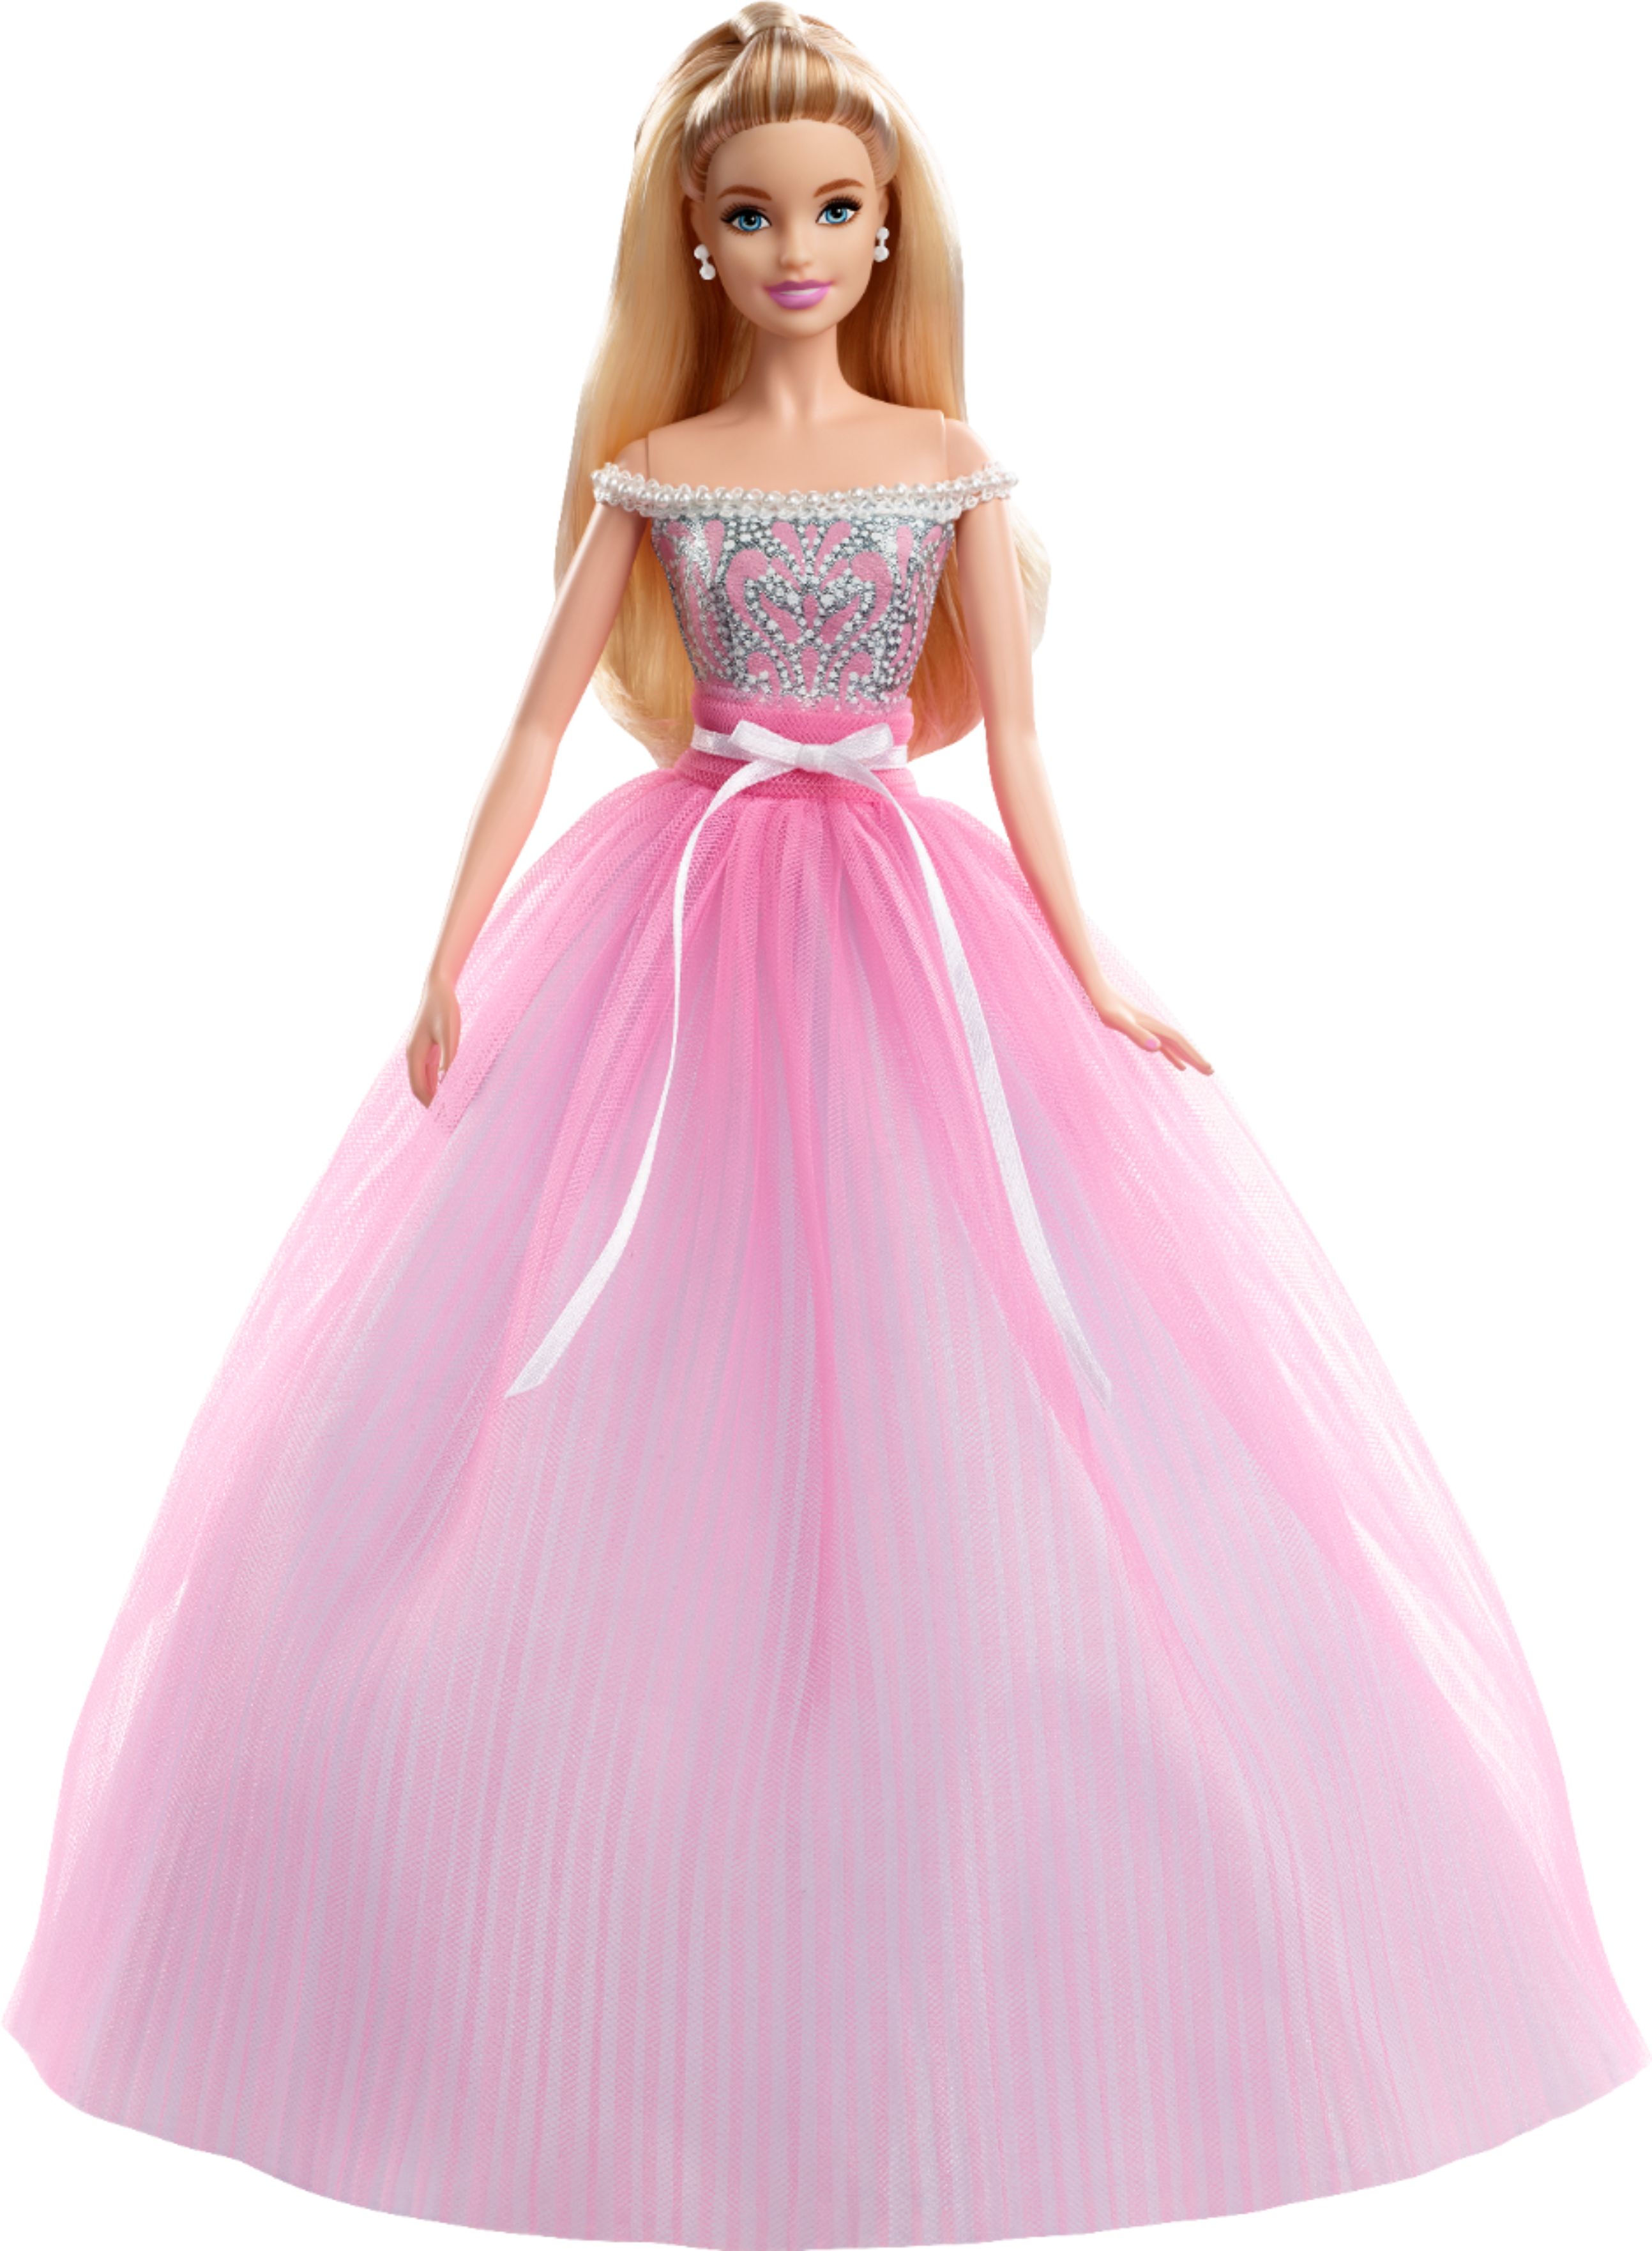 doll pink dress